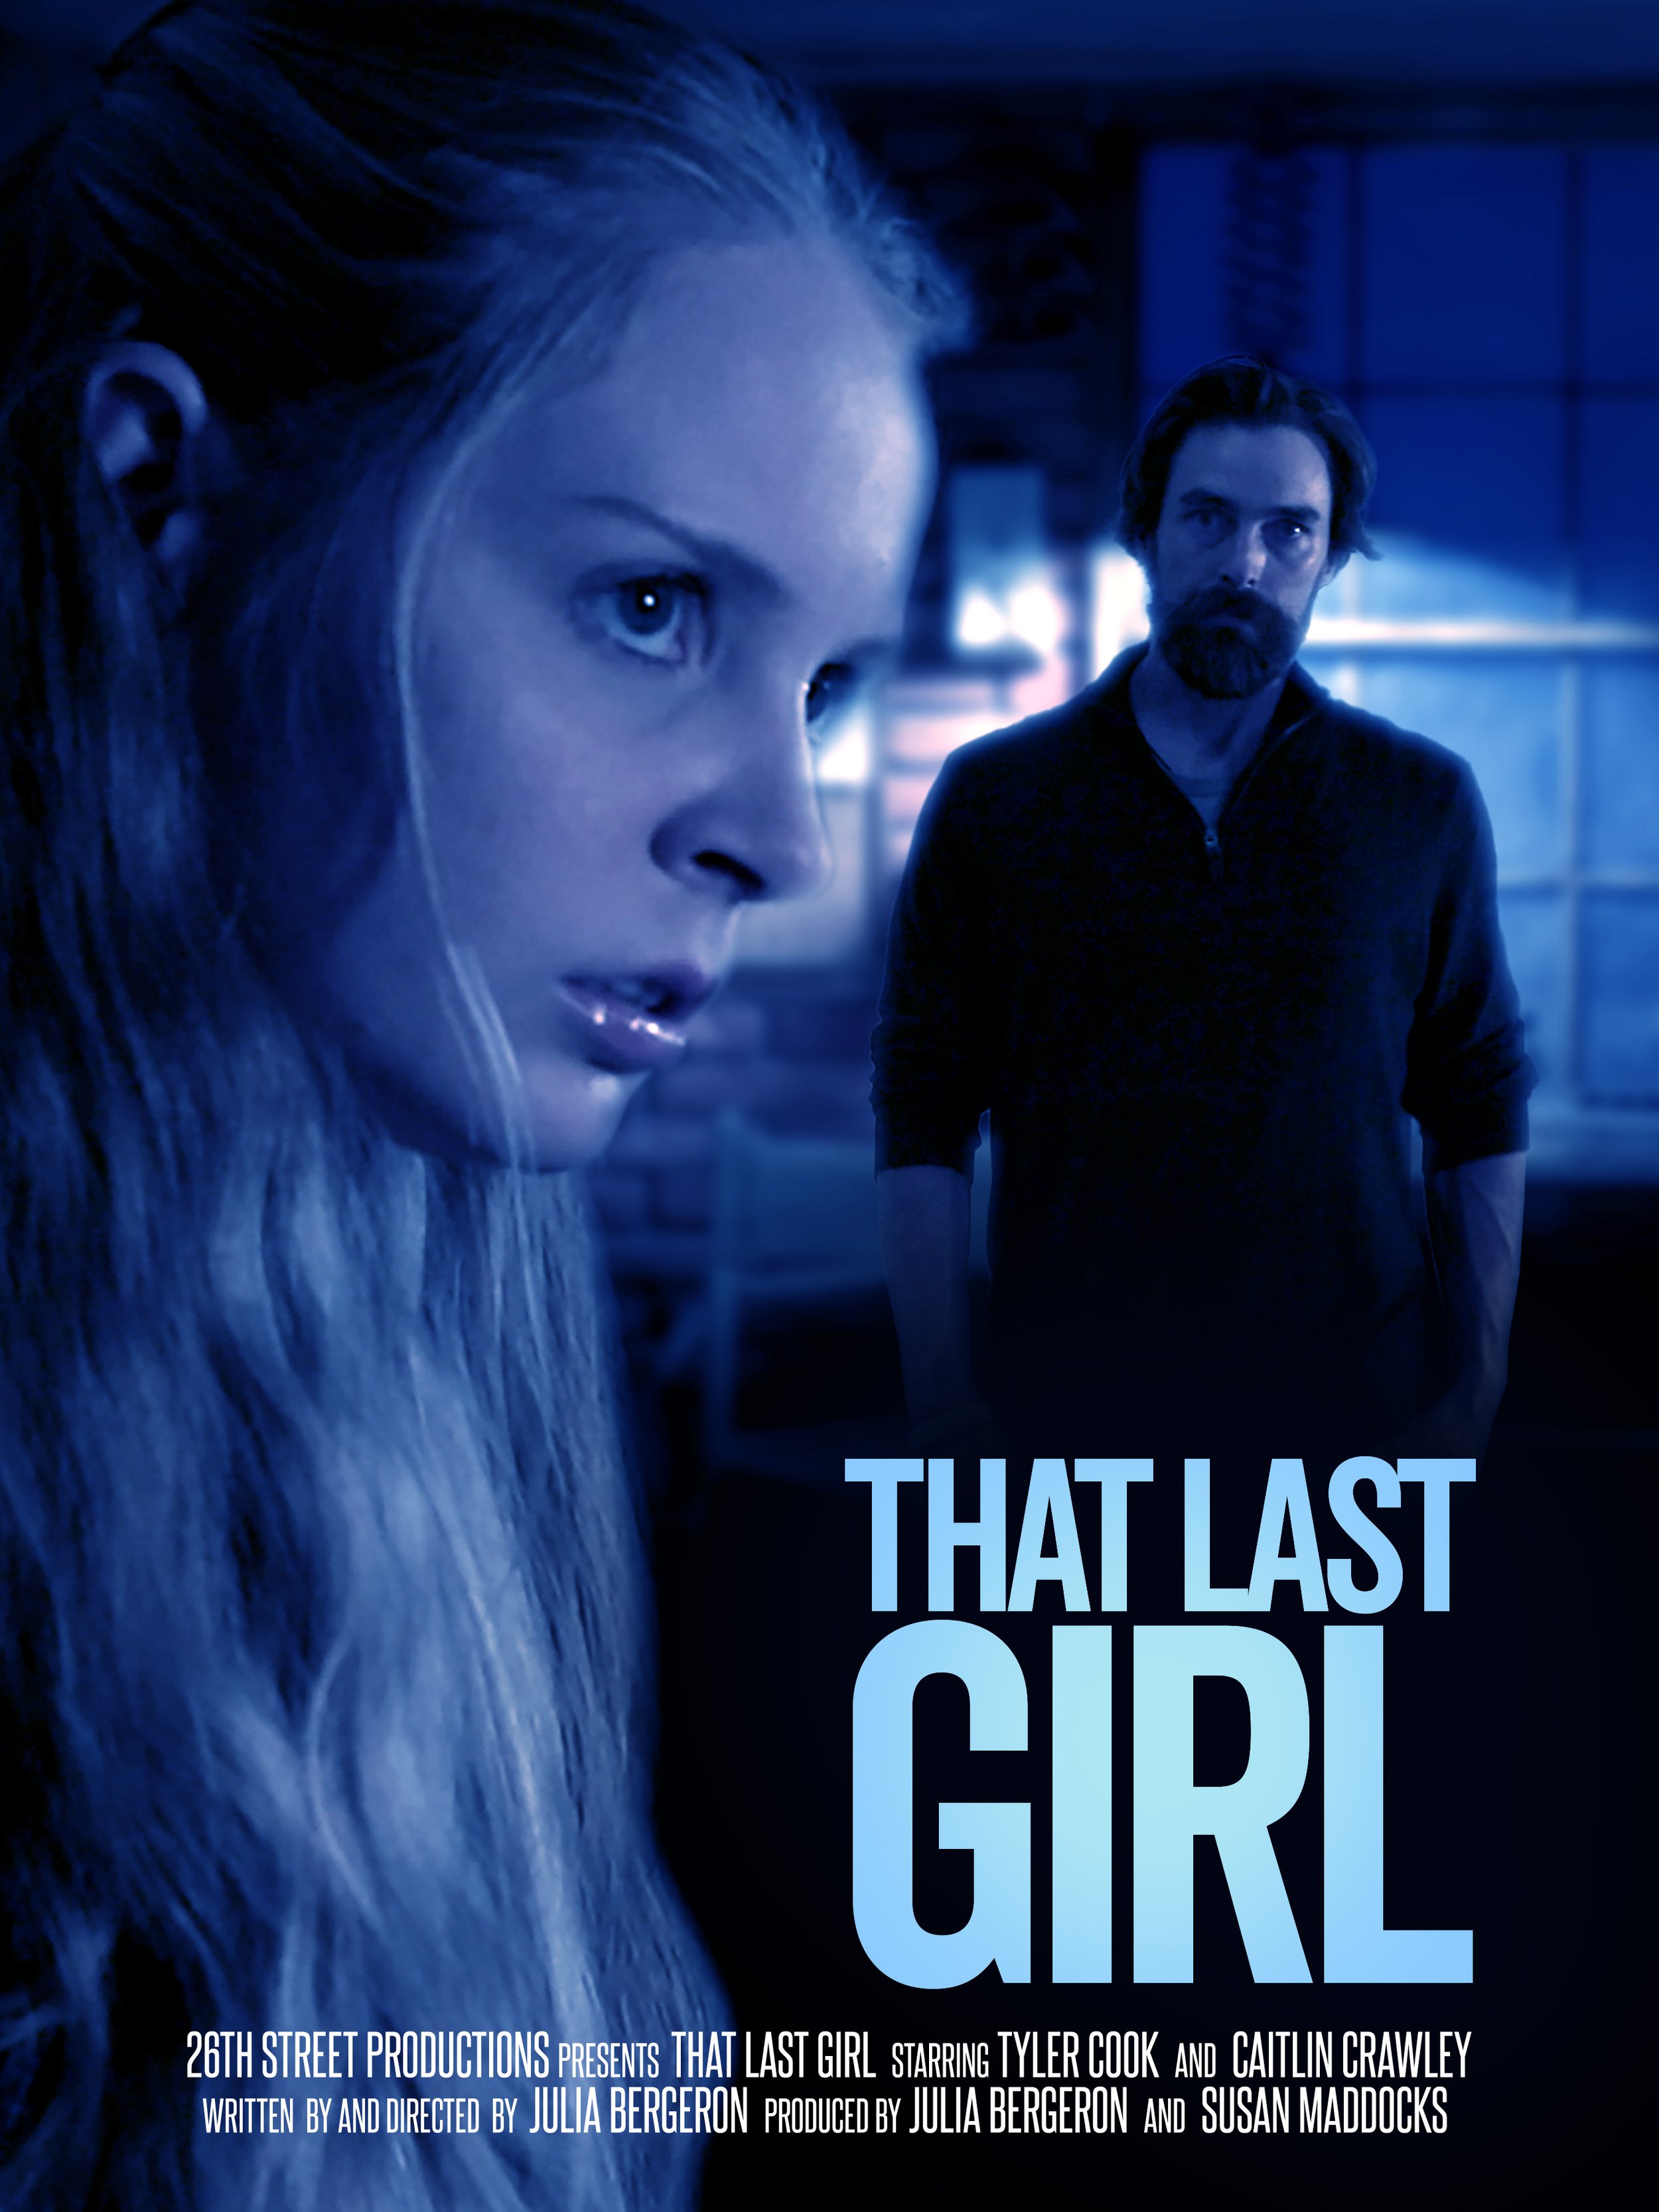 THAT LAST GIRL - 6 minute thriller